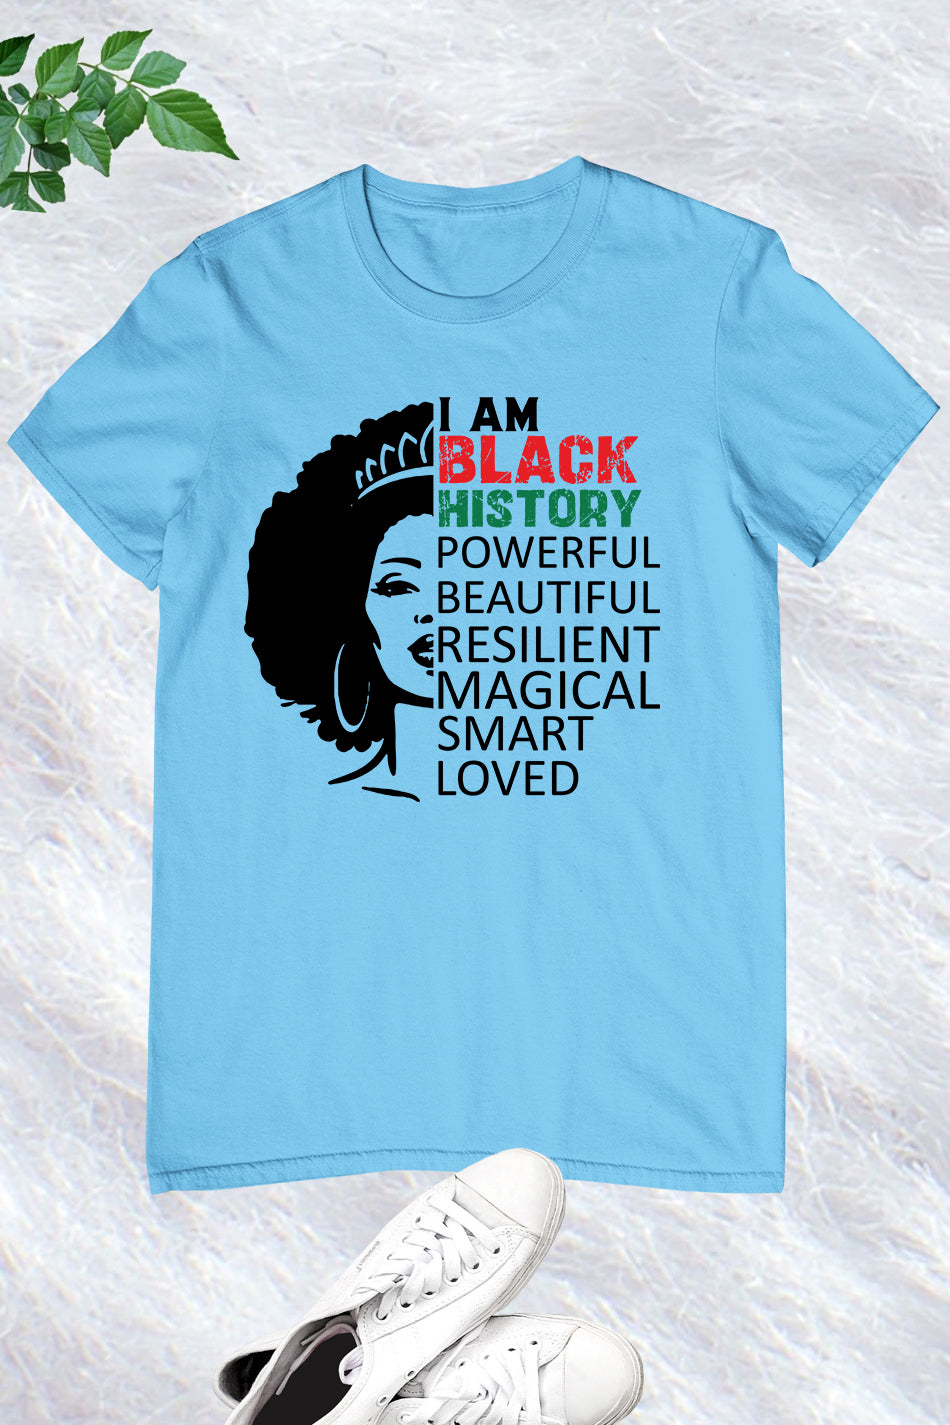 I'm Black History Powerful Beautiful Magical Smart Loved Shirt